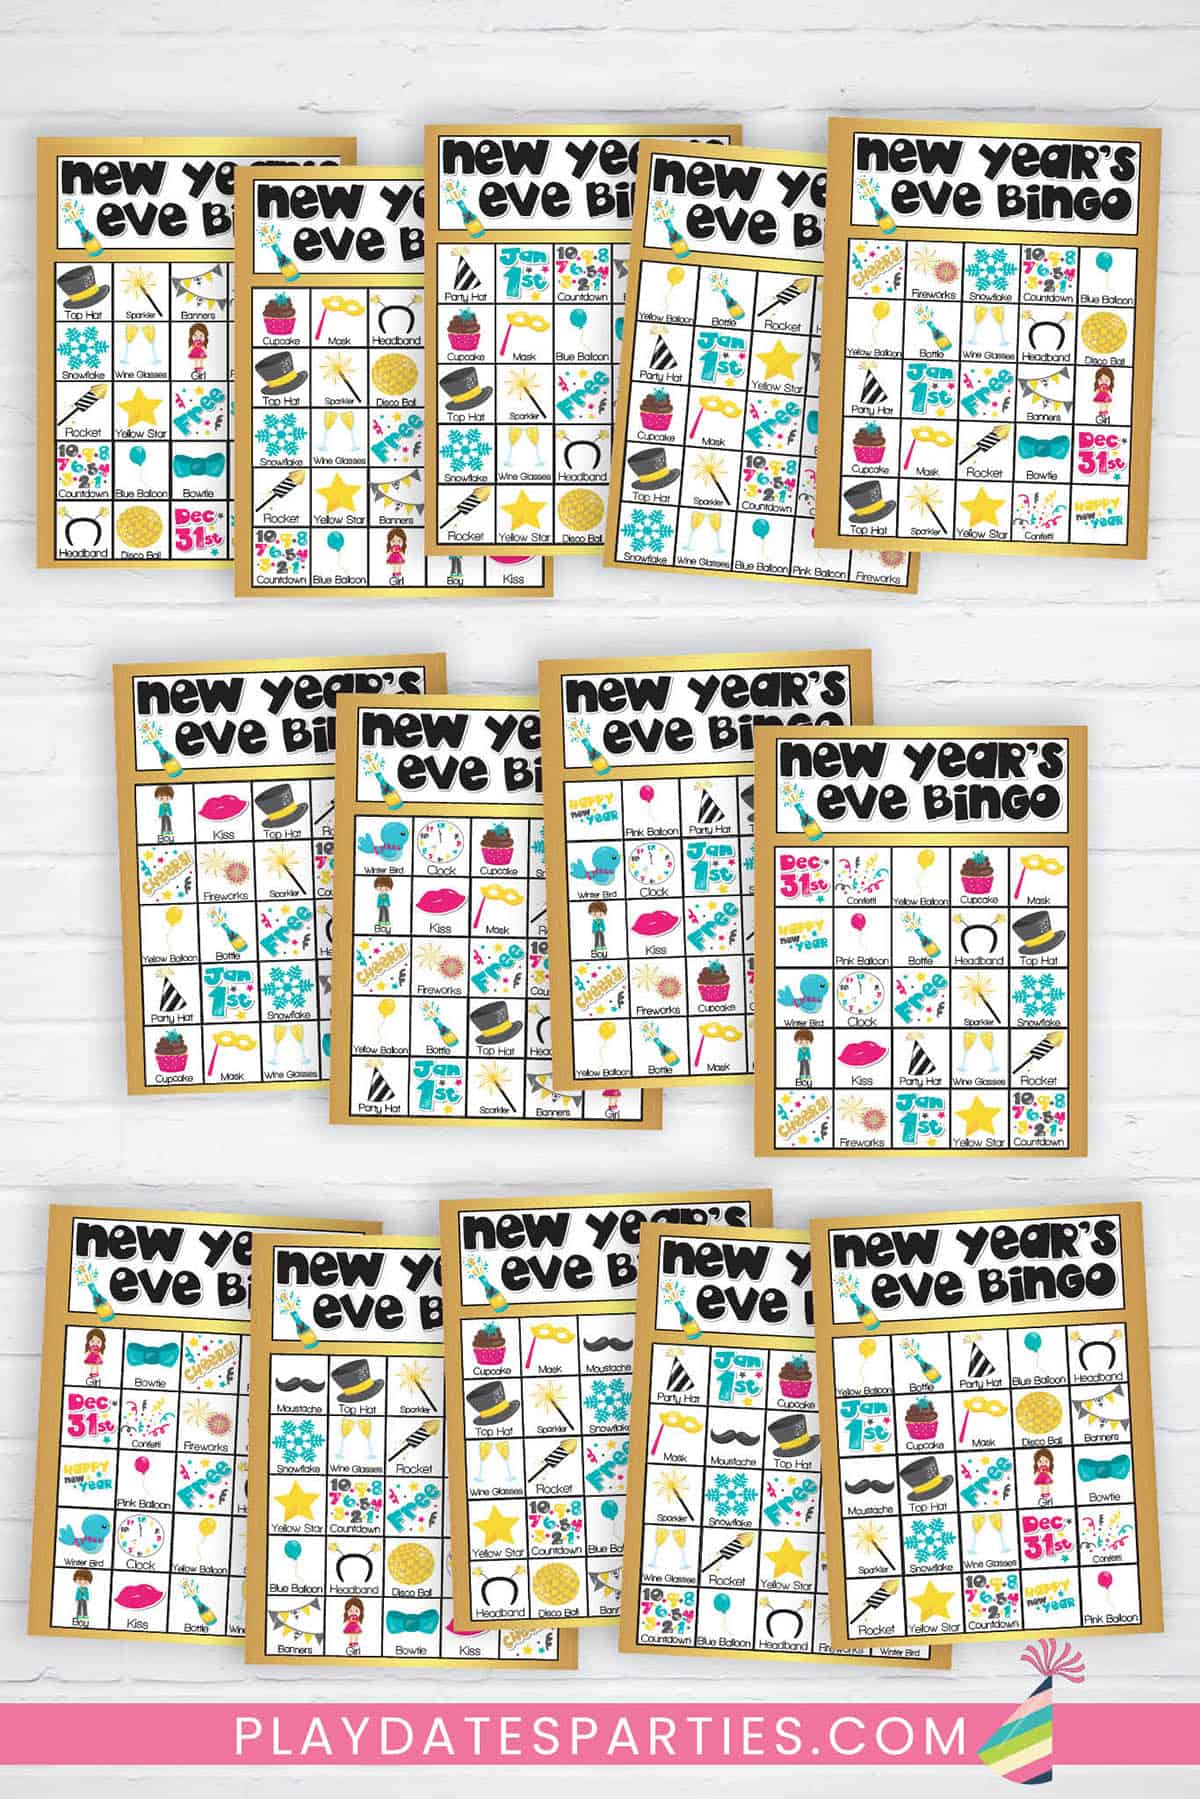 https://playdatesparties.com/wp-content/uploads/2022/12/New-Years-Eve-Bingo-Cards21.jpg